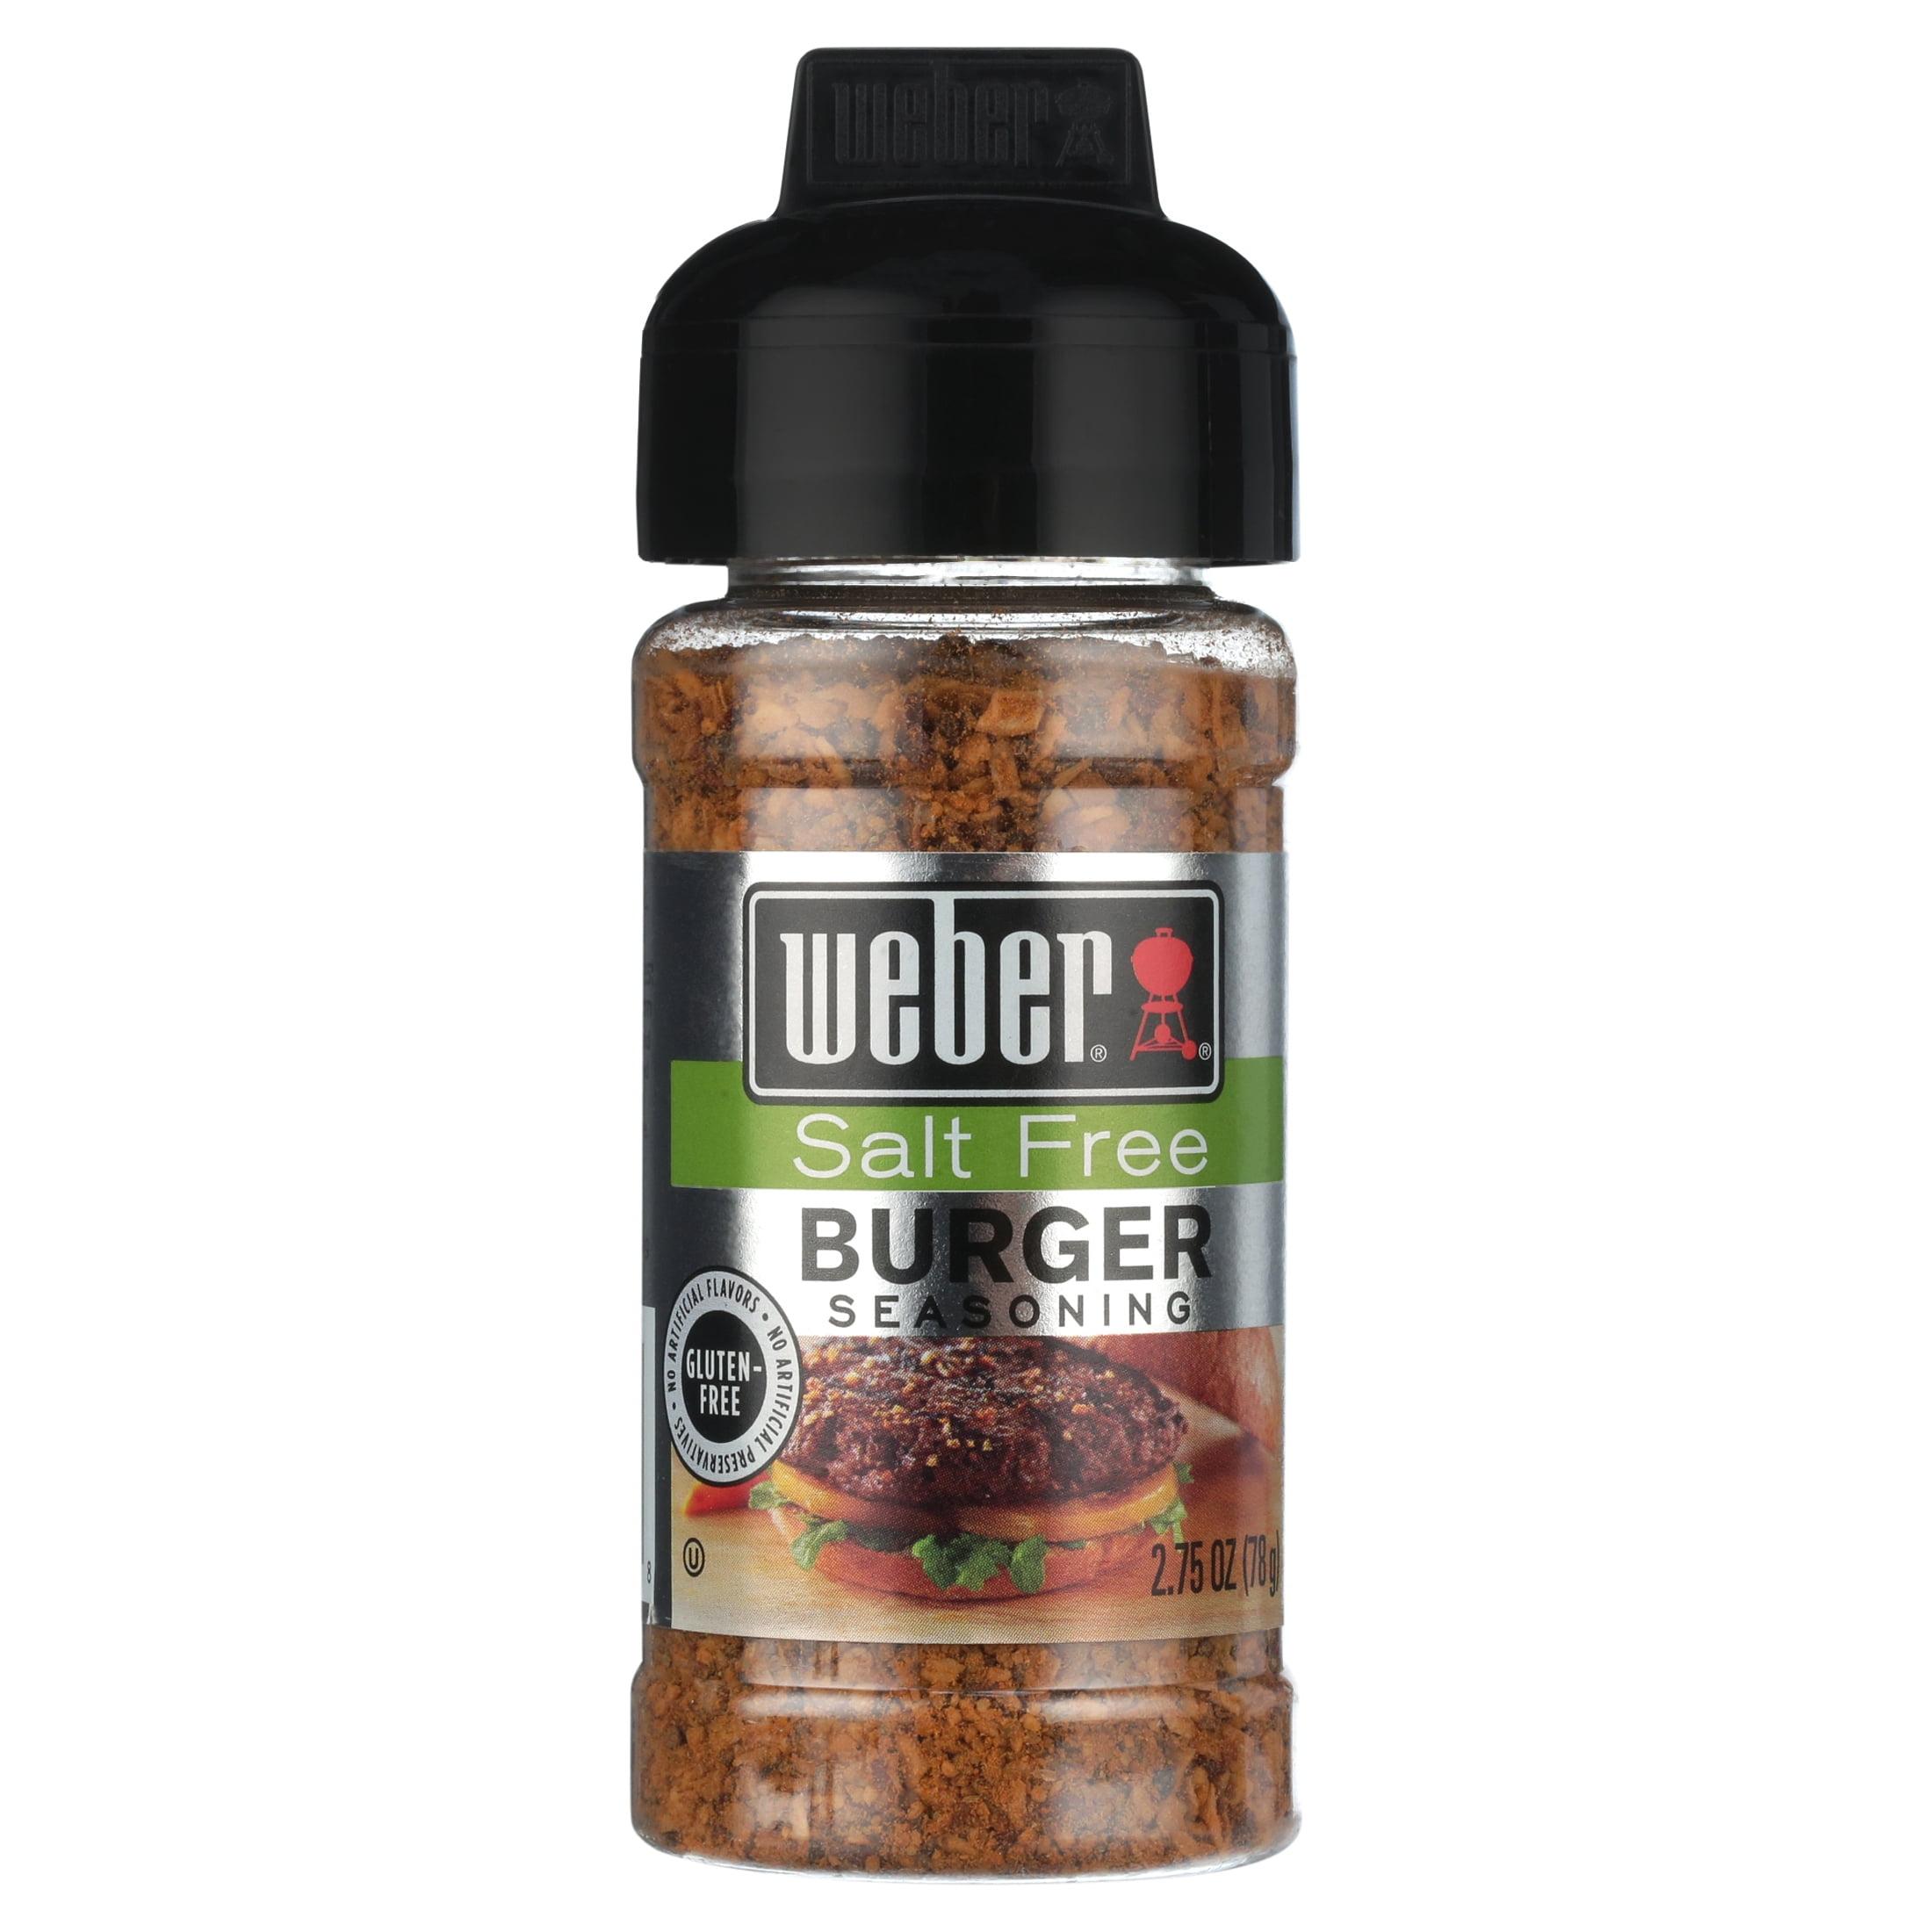 Weber Seasoning, Salt Free, Steak - 2.50 oz